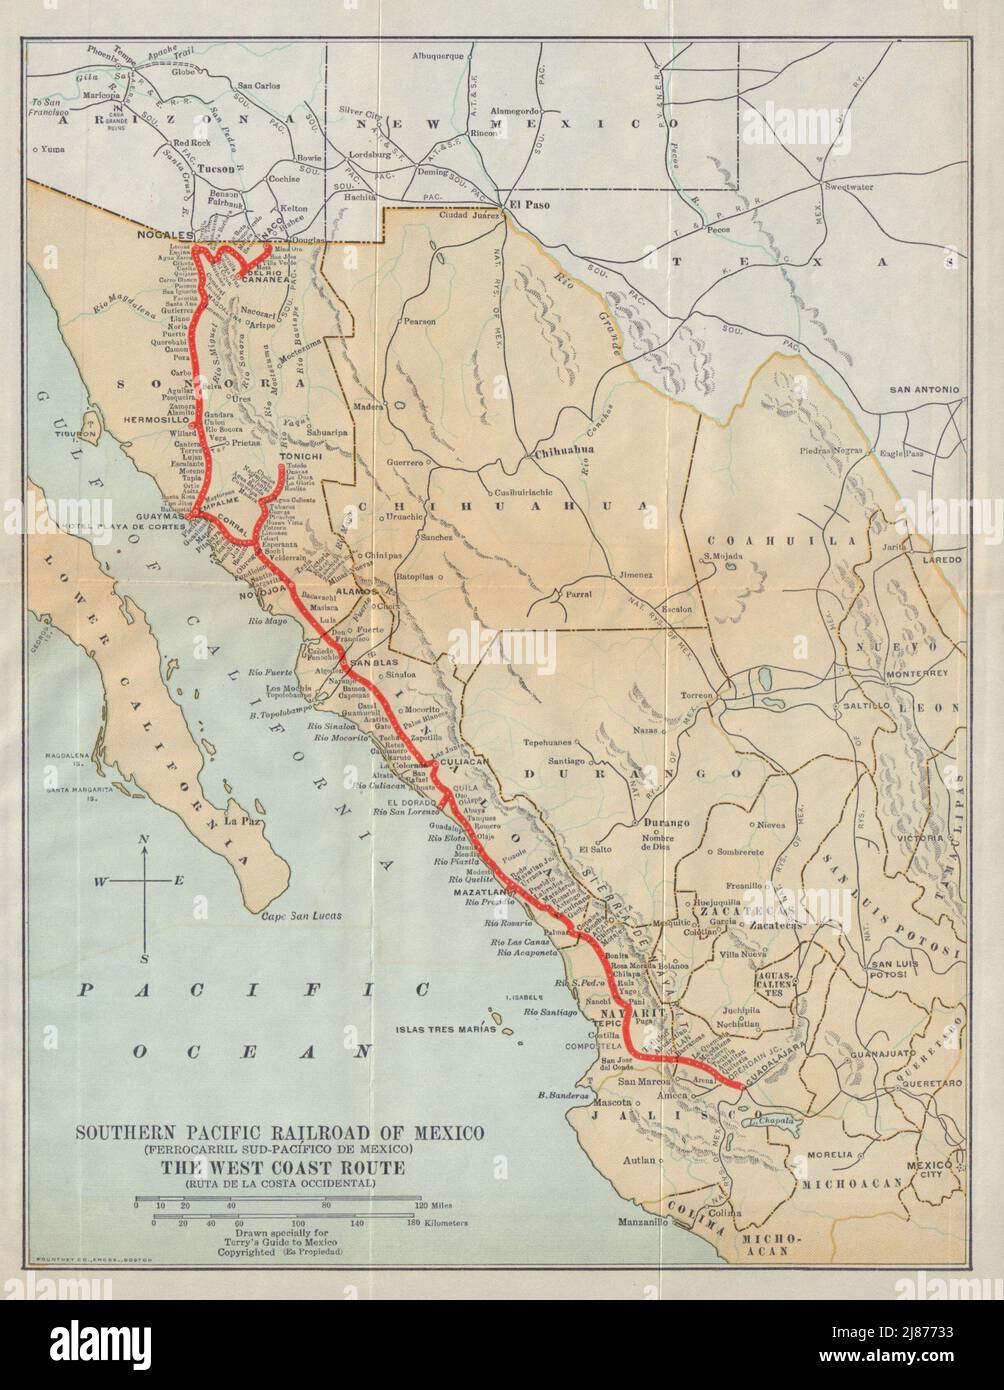 Southern Pacific Railroad / Ferrocarril Sud-Pacifico de Mexico 1938 old map Stock Photo